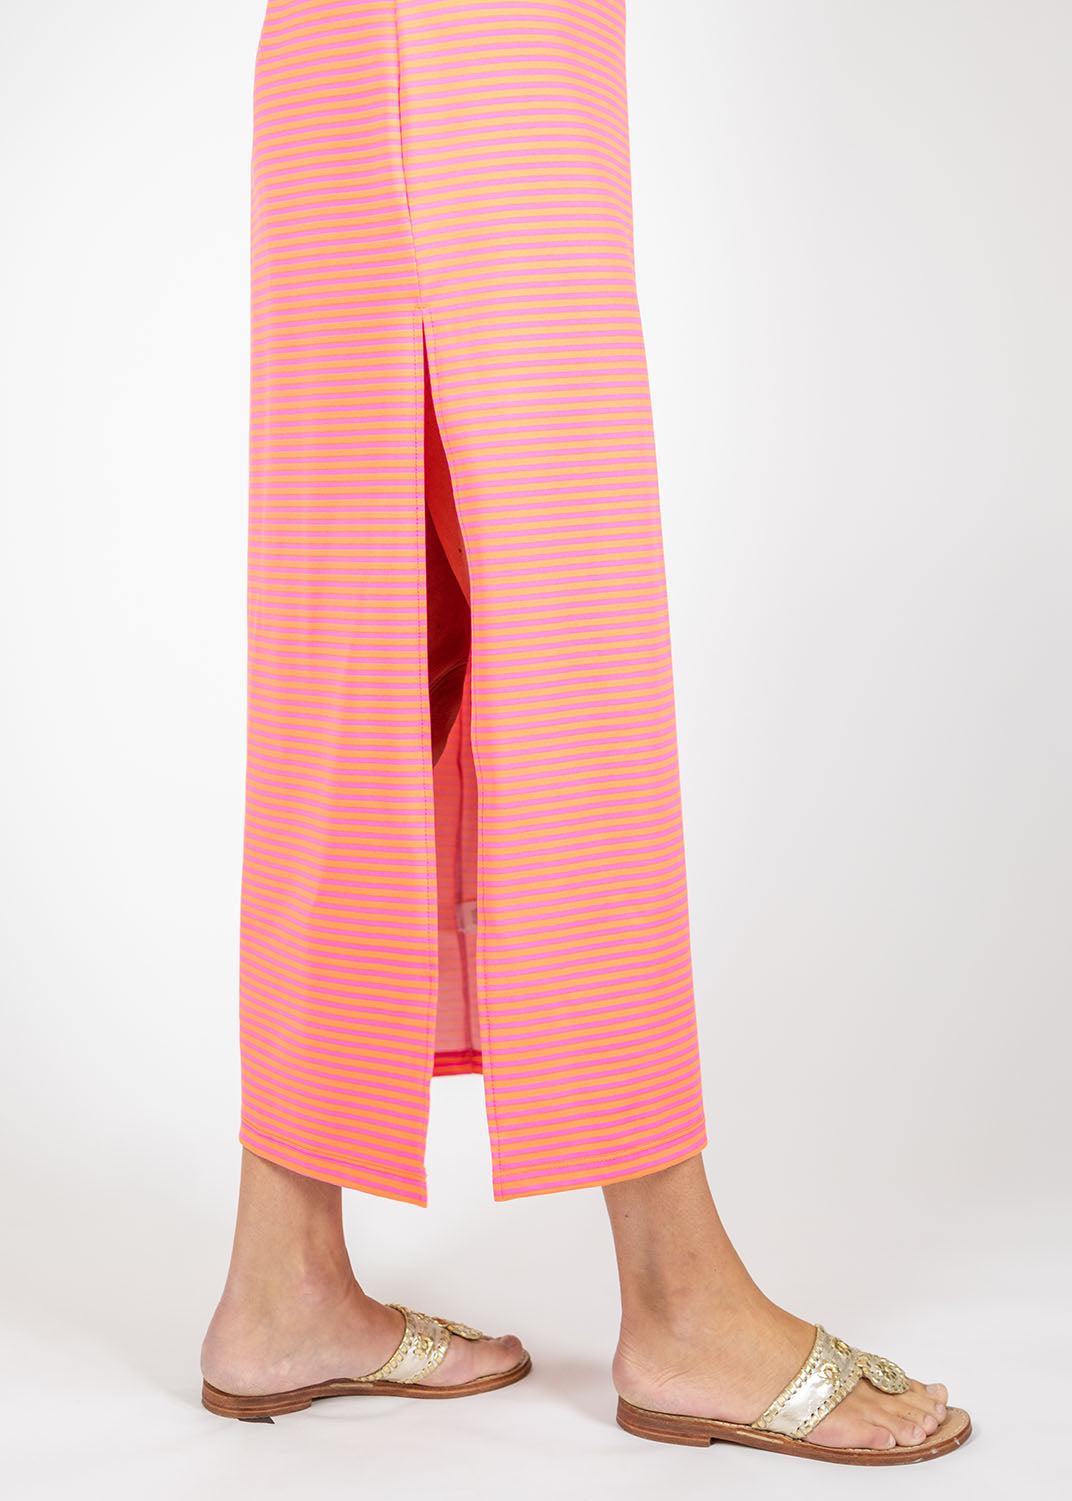 Lucille Maxi Dress - Juicy Stripe Pink/Orange